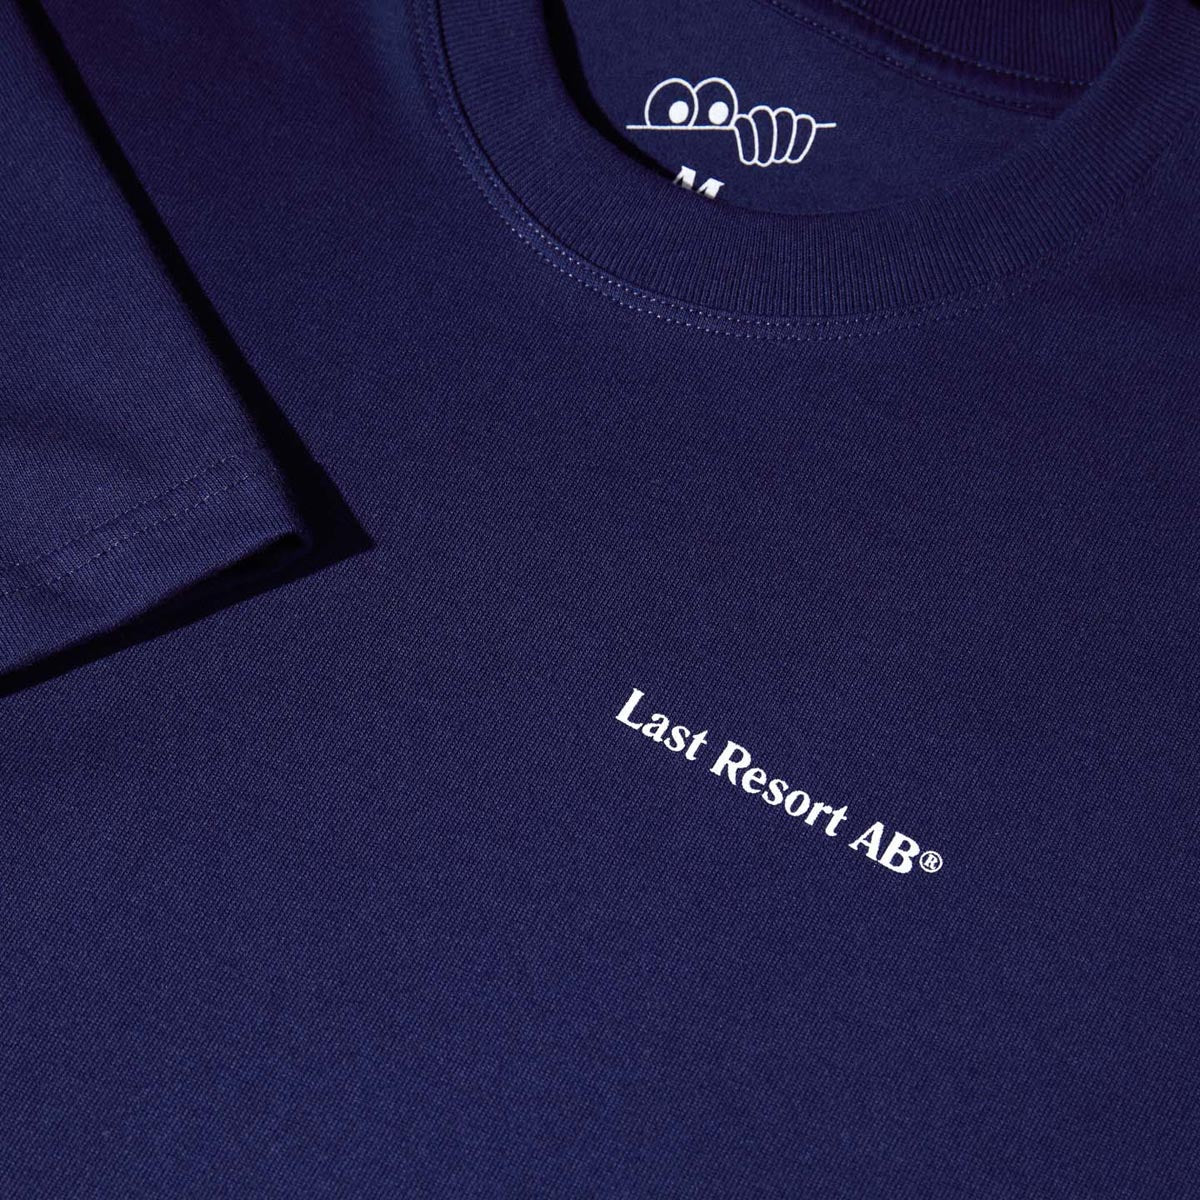 Last Resort AB Atlas Monogram T-Shirt - Dress Blues image 3